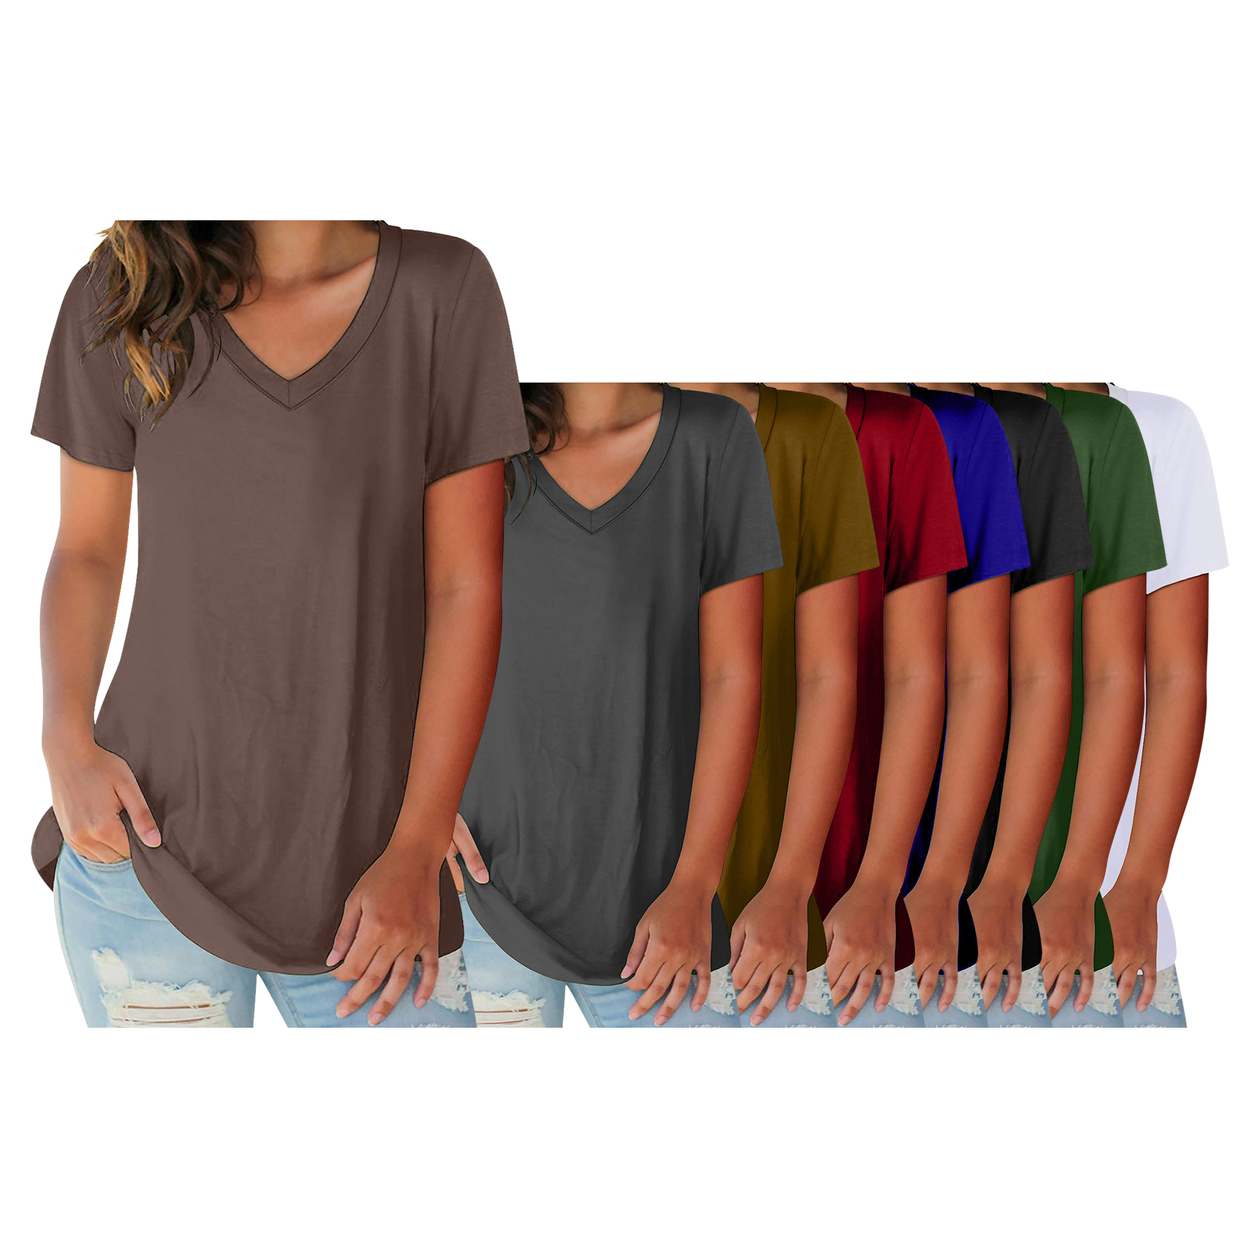 5-Pack: Women's Ultra Soft Smooth Cotton Blend Basic V-Neck Short Sleeve Shirts - X-large